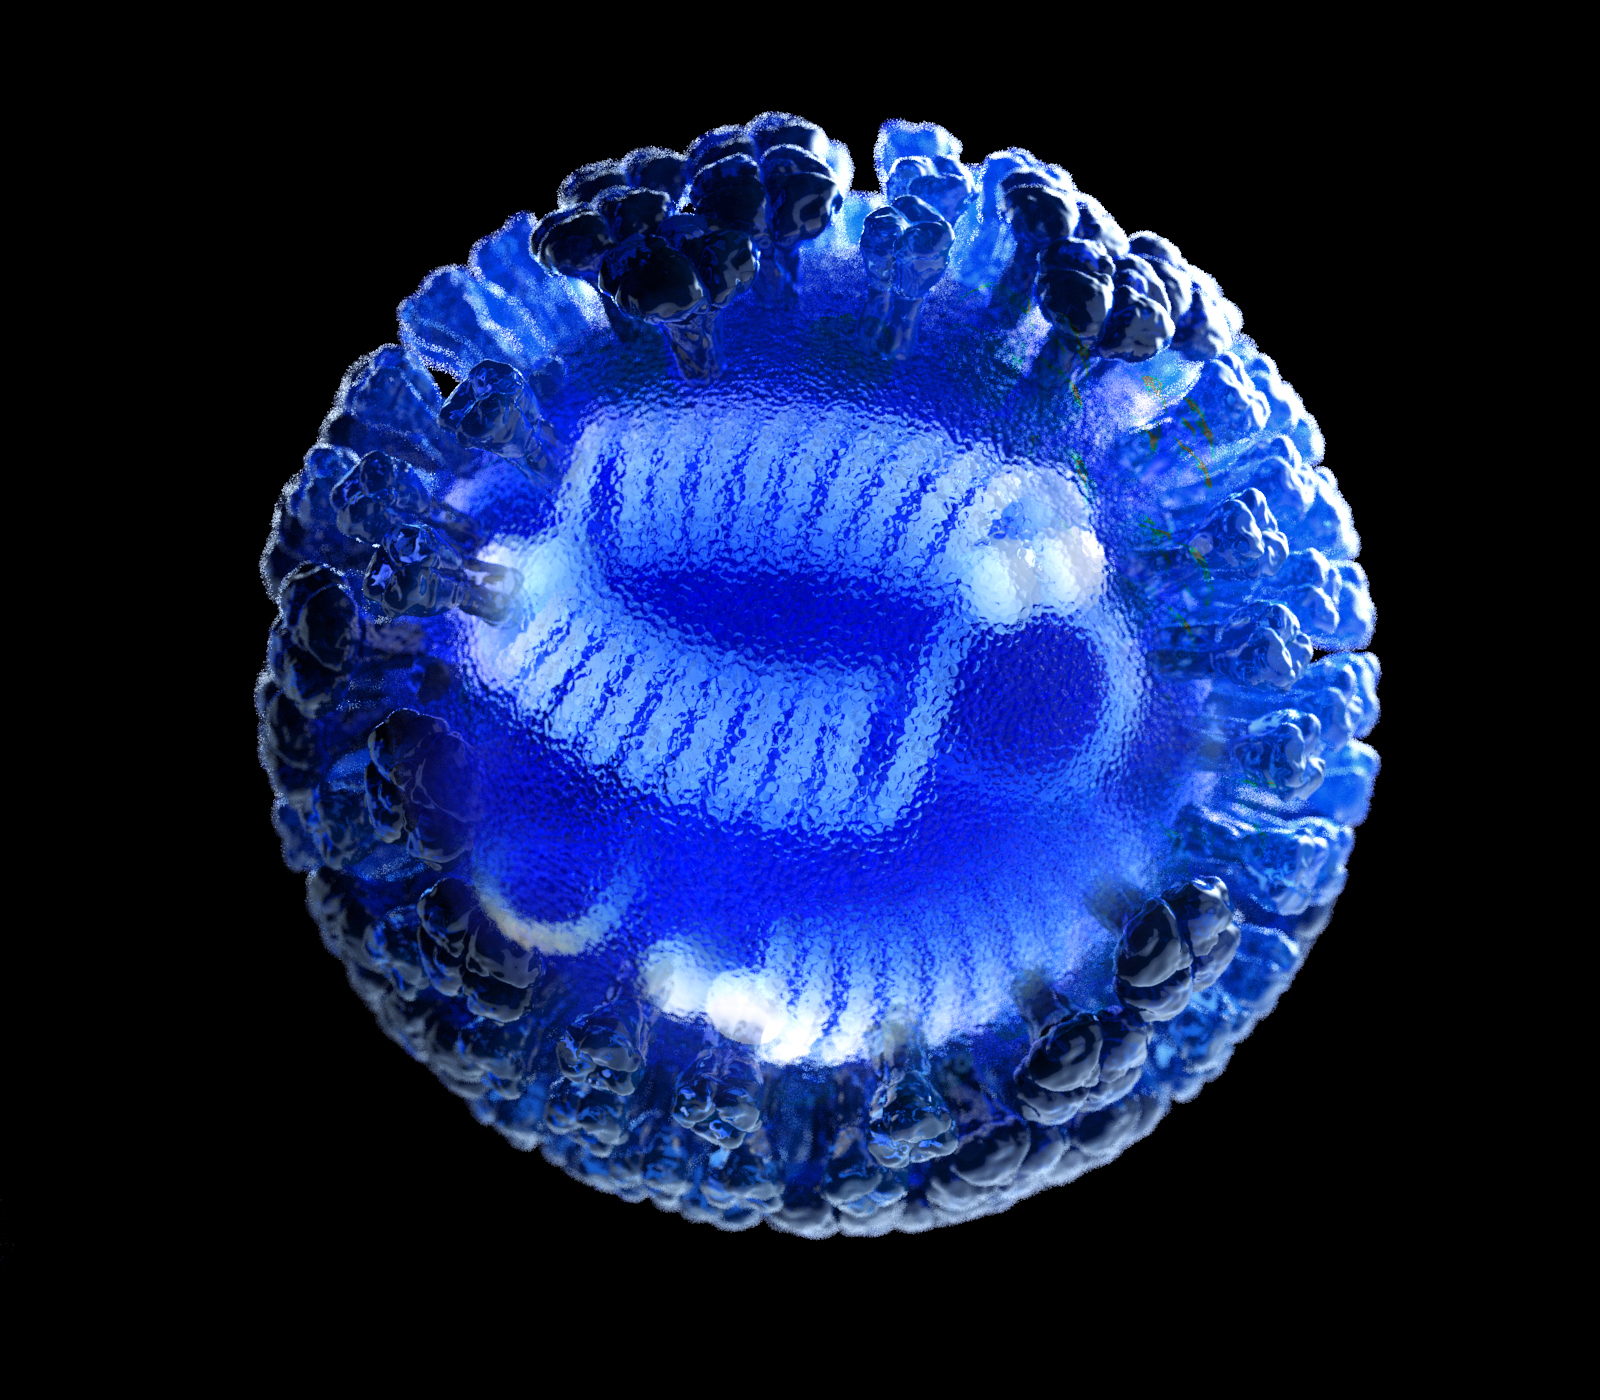 3D computer-generated rendering of the influenza virus